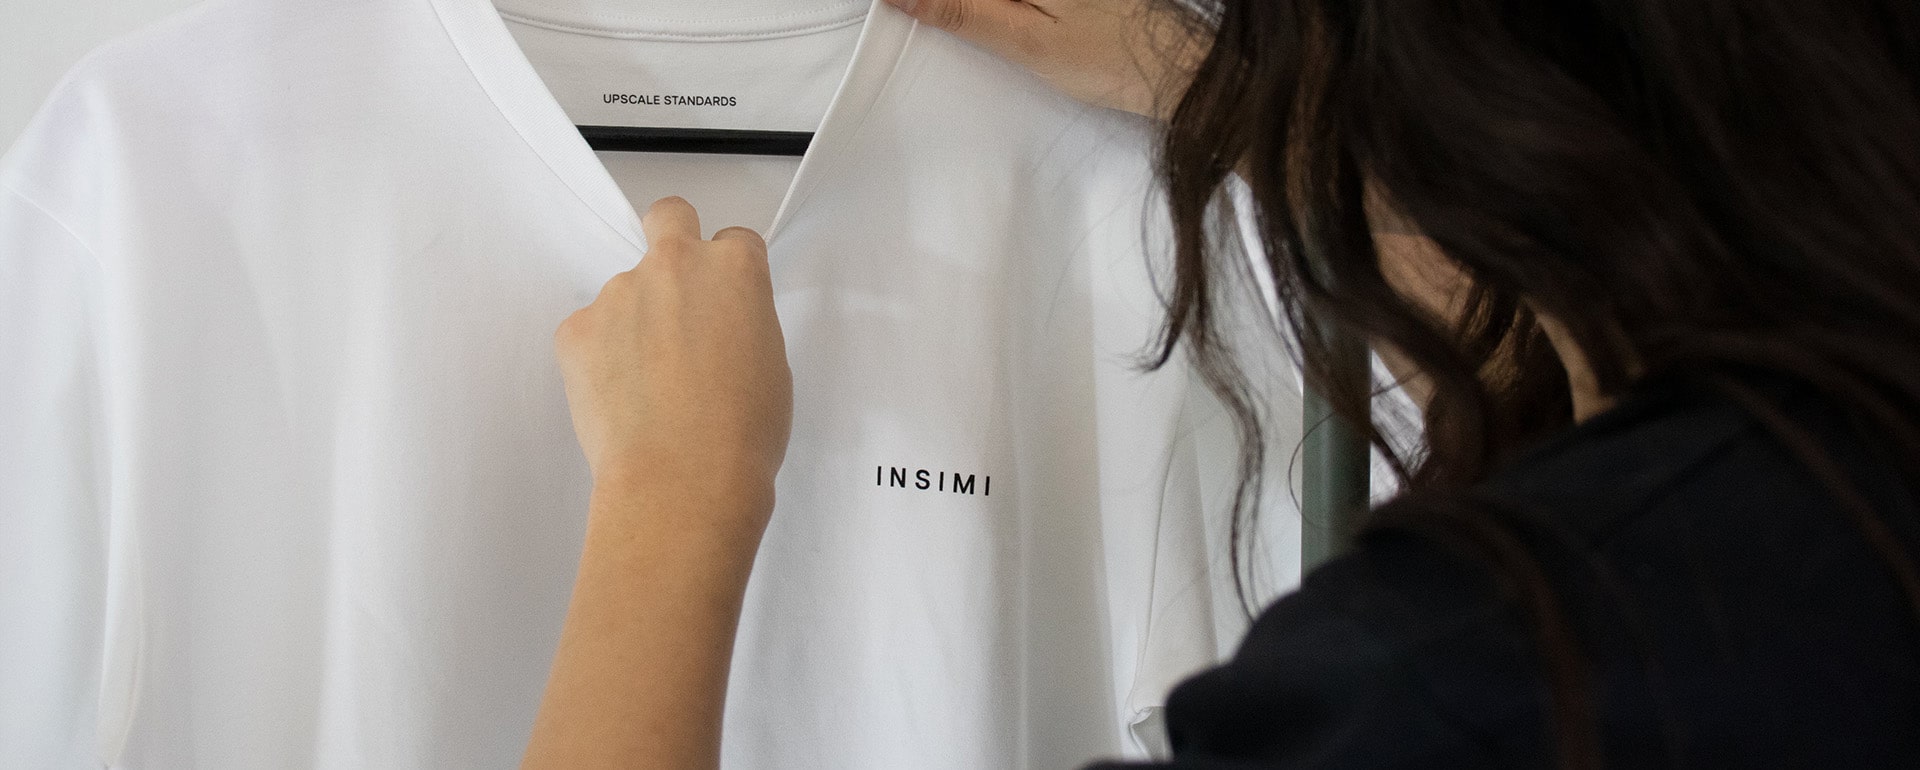 insimi design branding